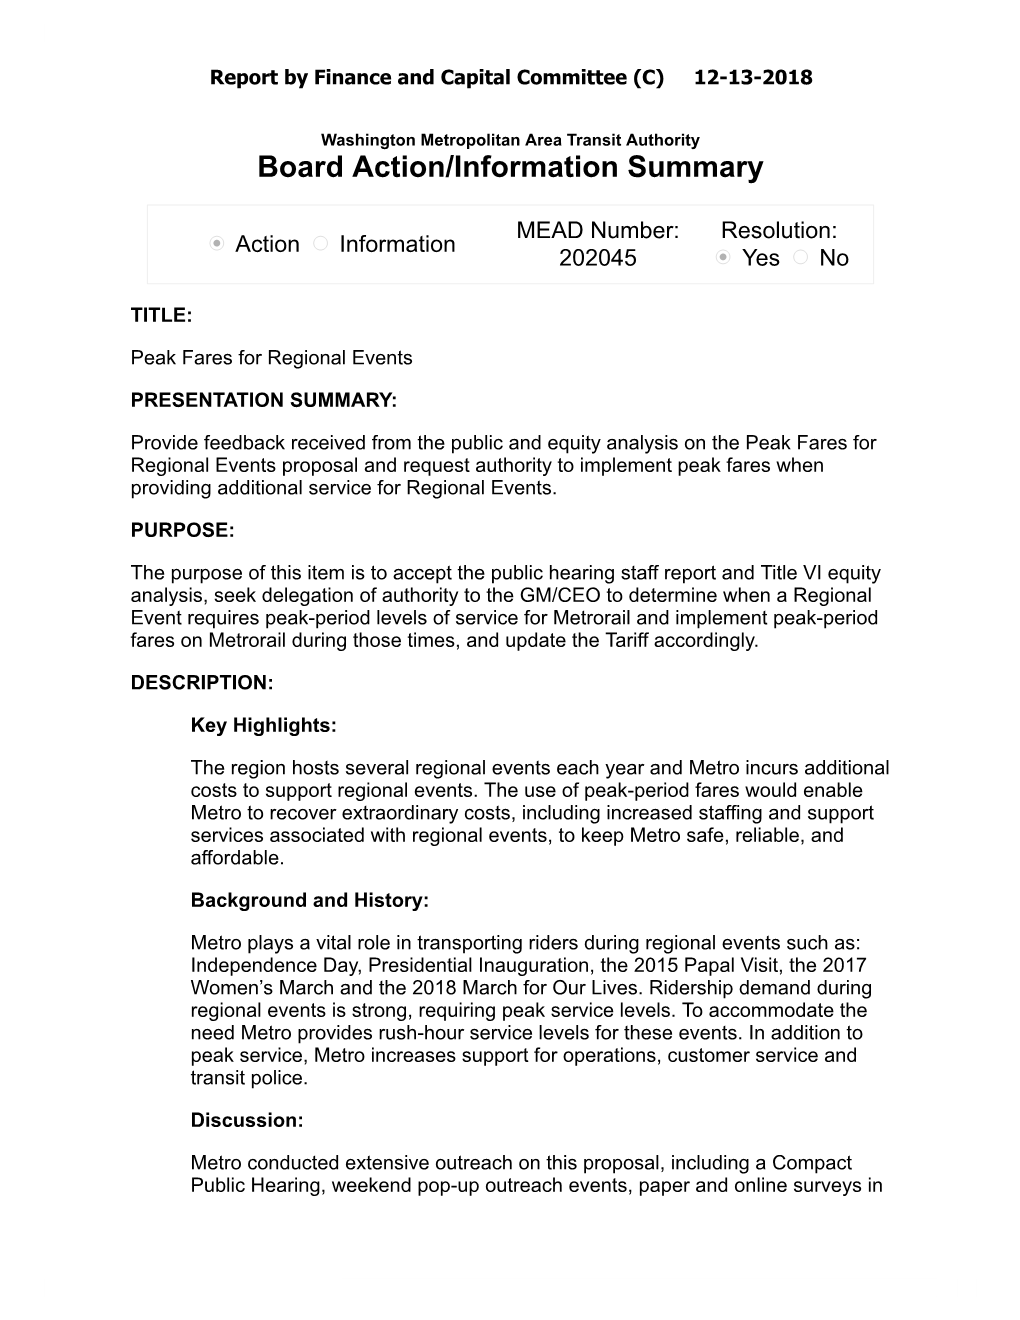 Board Action/Information Summary